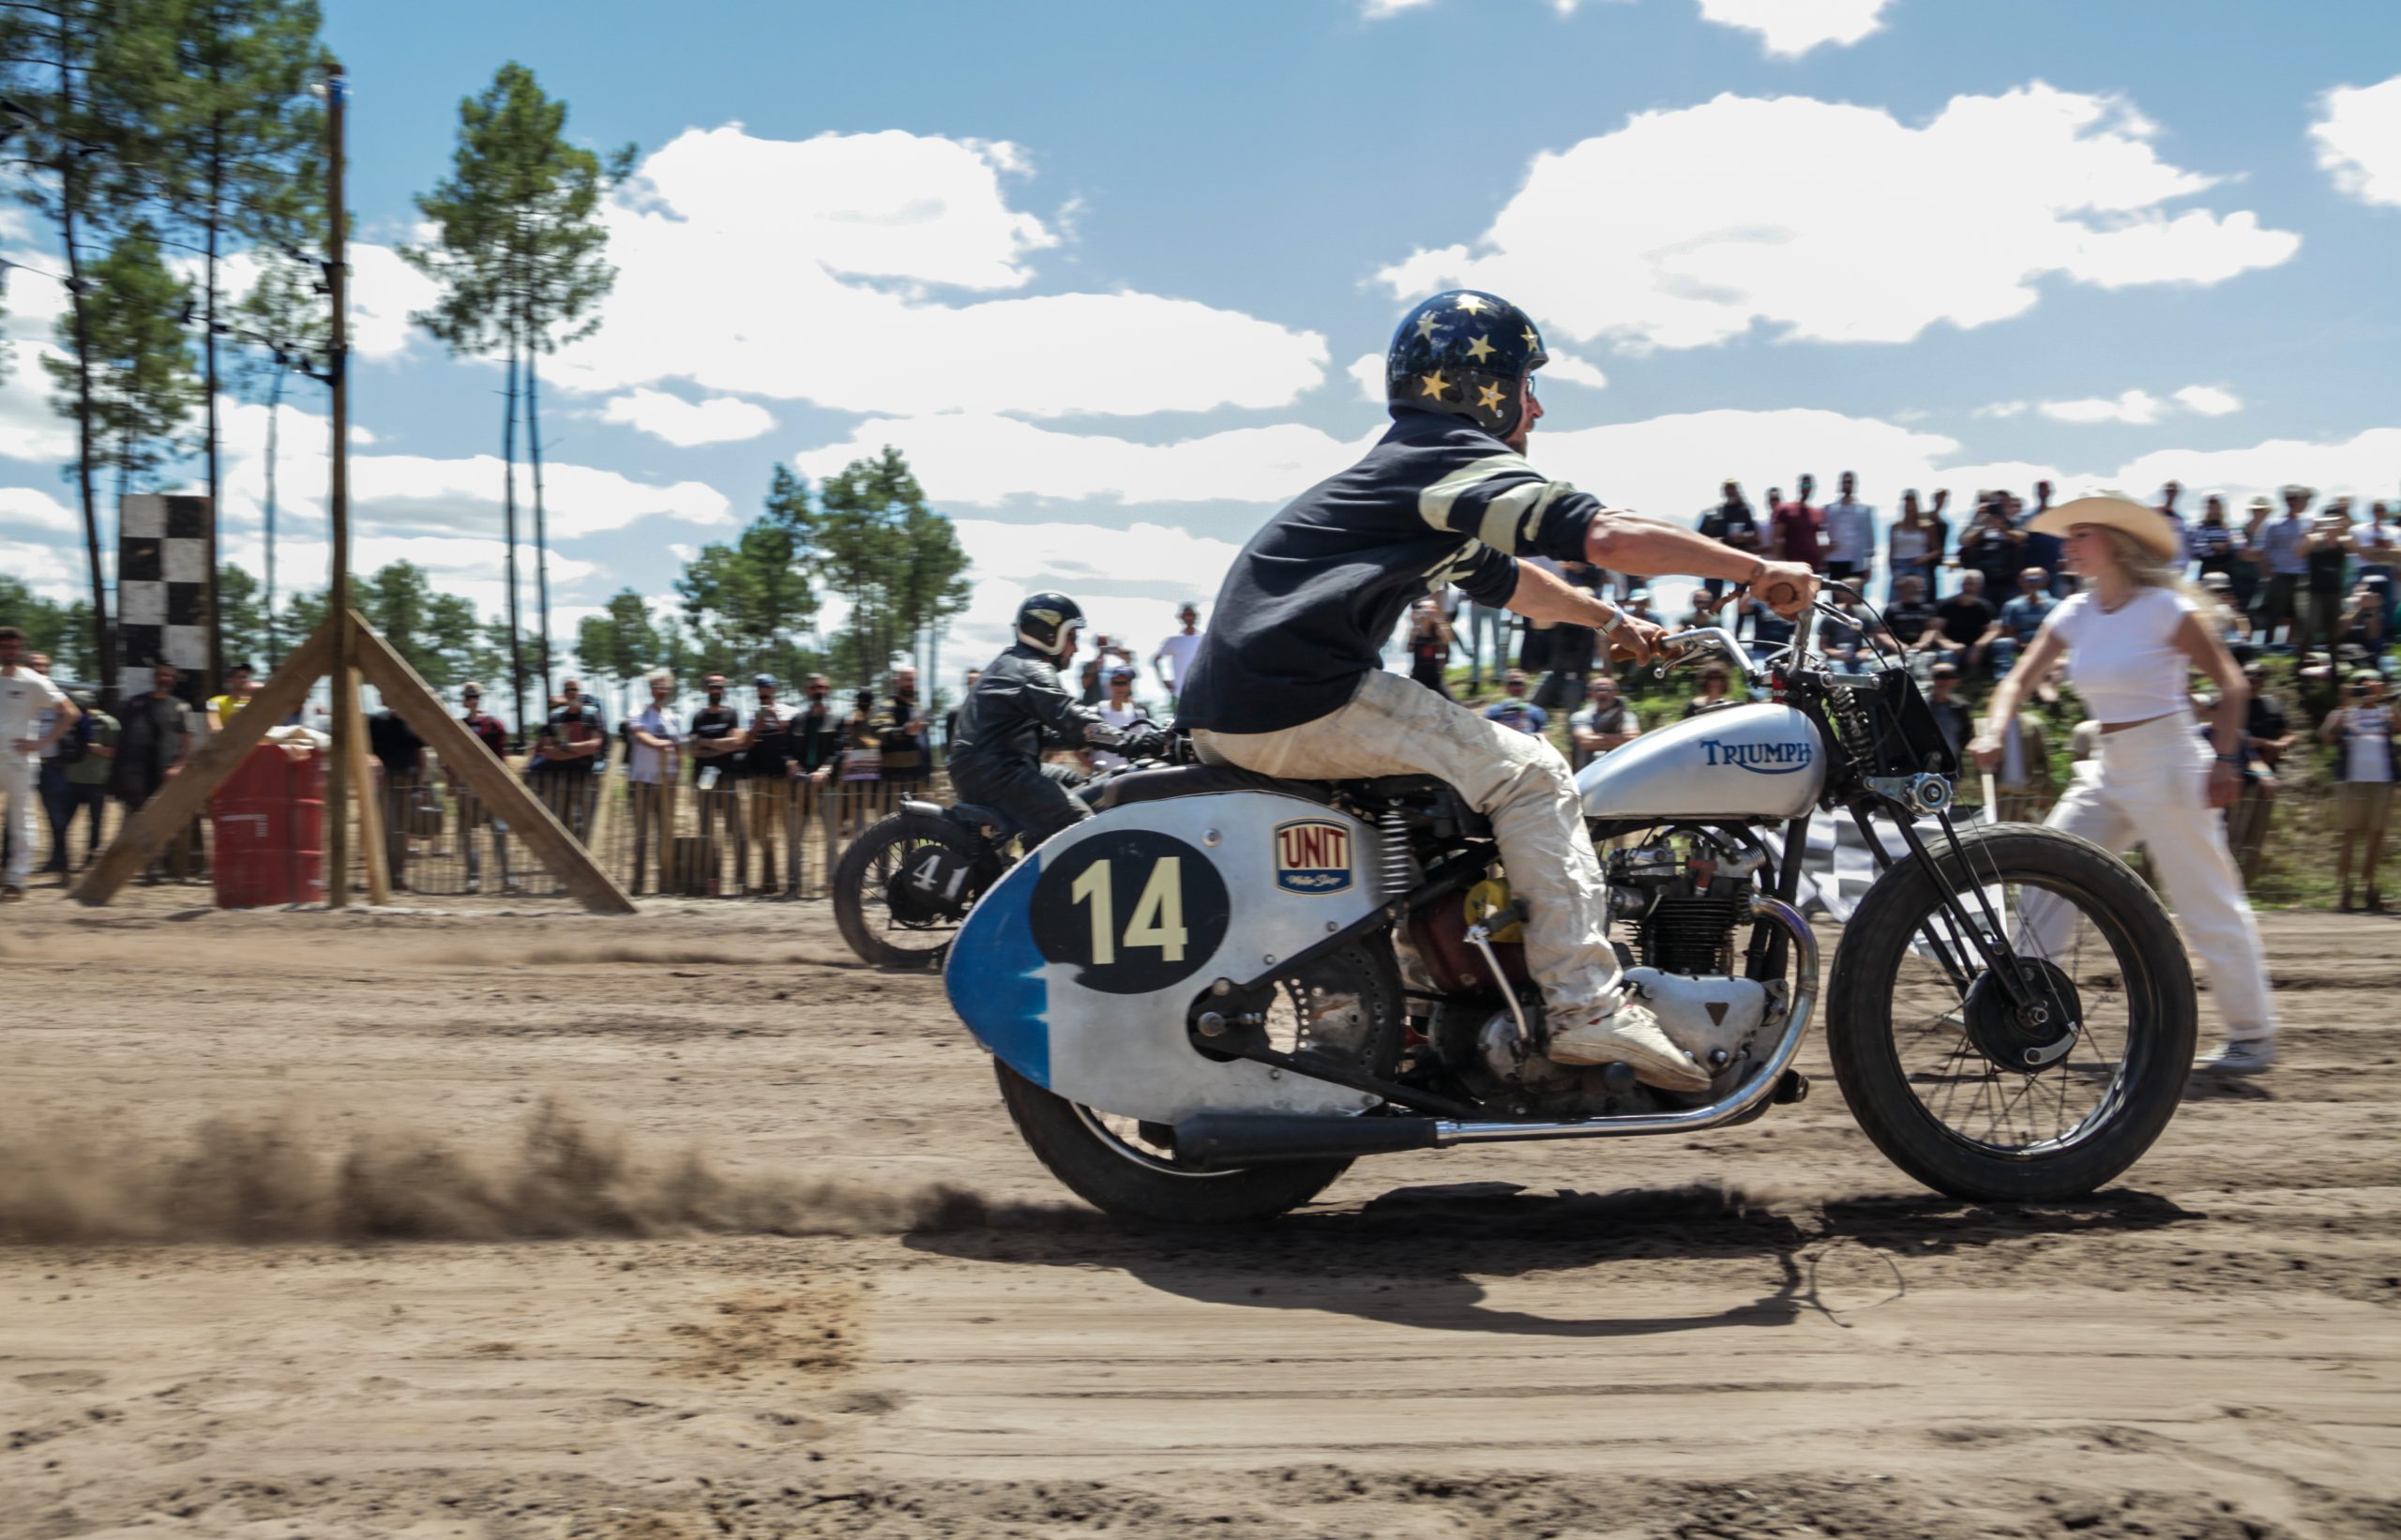 Beach dune racing motorcycles